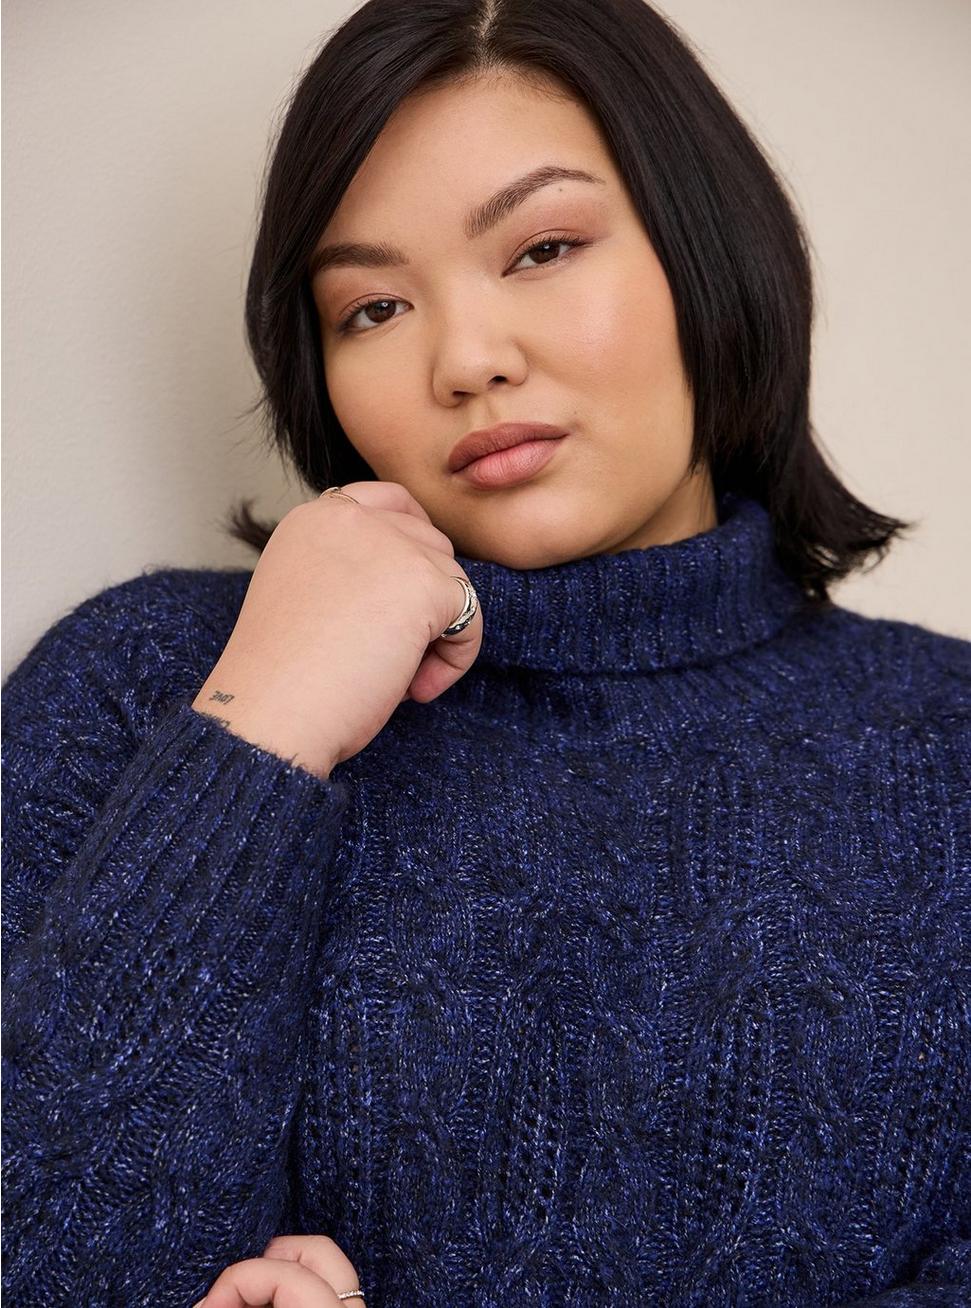 Plus Size Vegan Cashmere Pullover Turtle Neck Sweater, BLUE, alternate